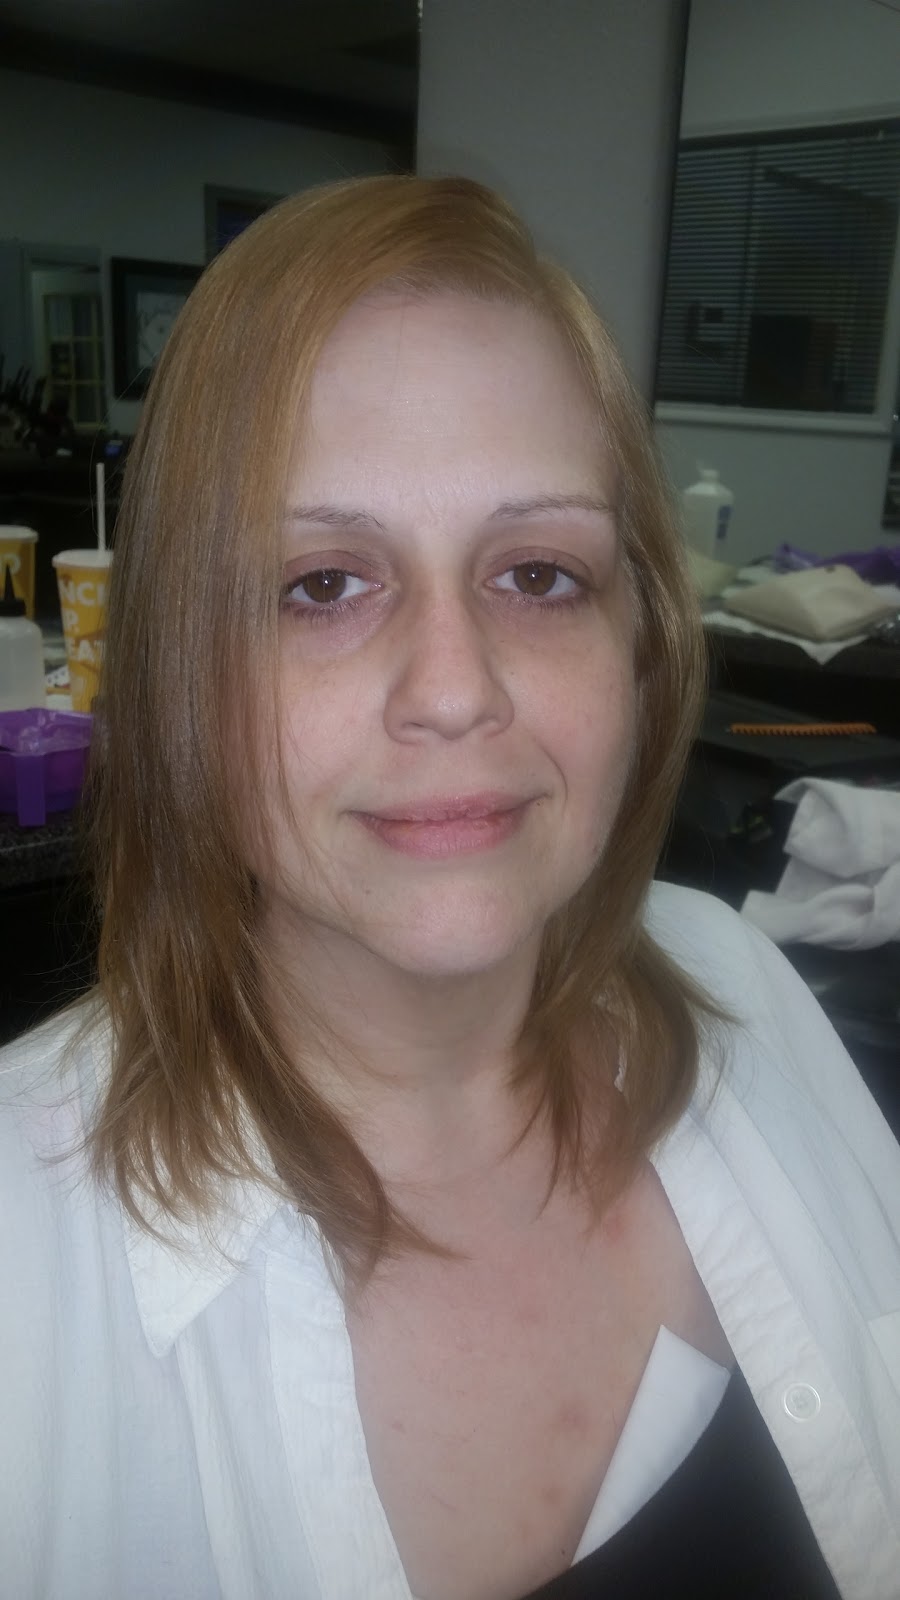 Flewellenss Hair Salon - hair care  | Photo 9 of 9 | Address: 3611 S Lancaster Rd, Dallas, TX 75216, USA | Phone: (214) 371-3322